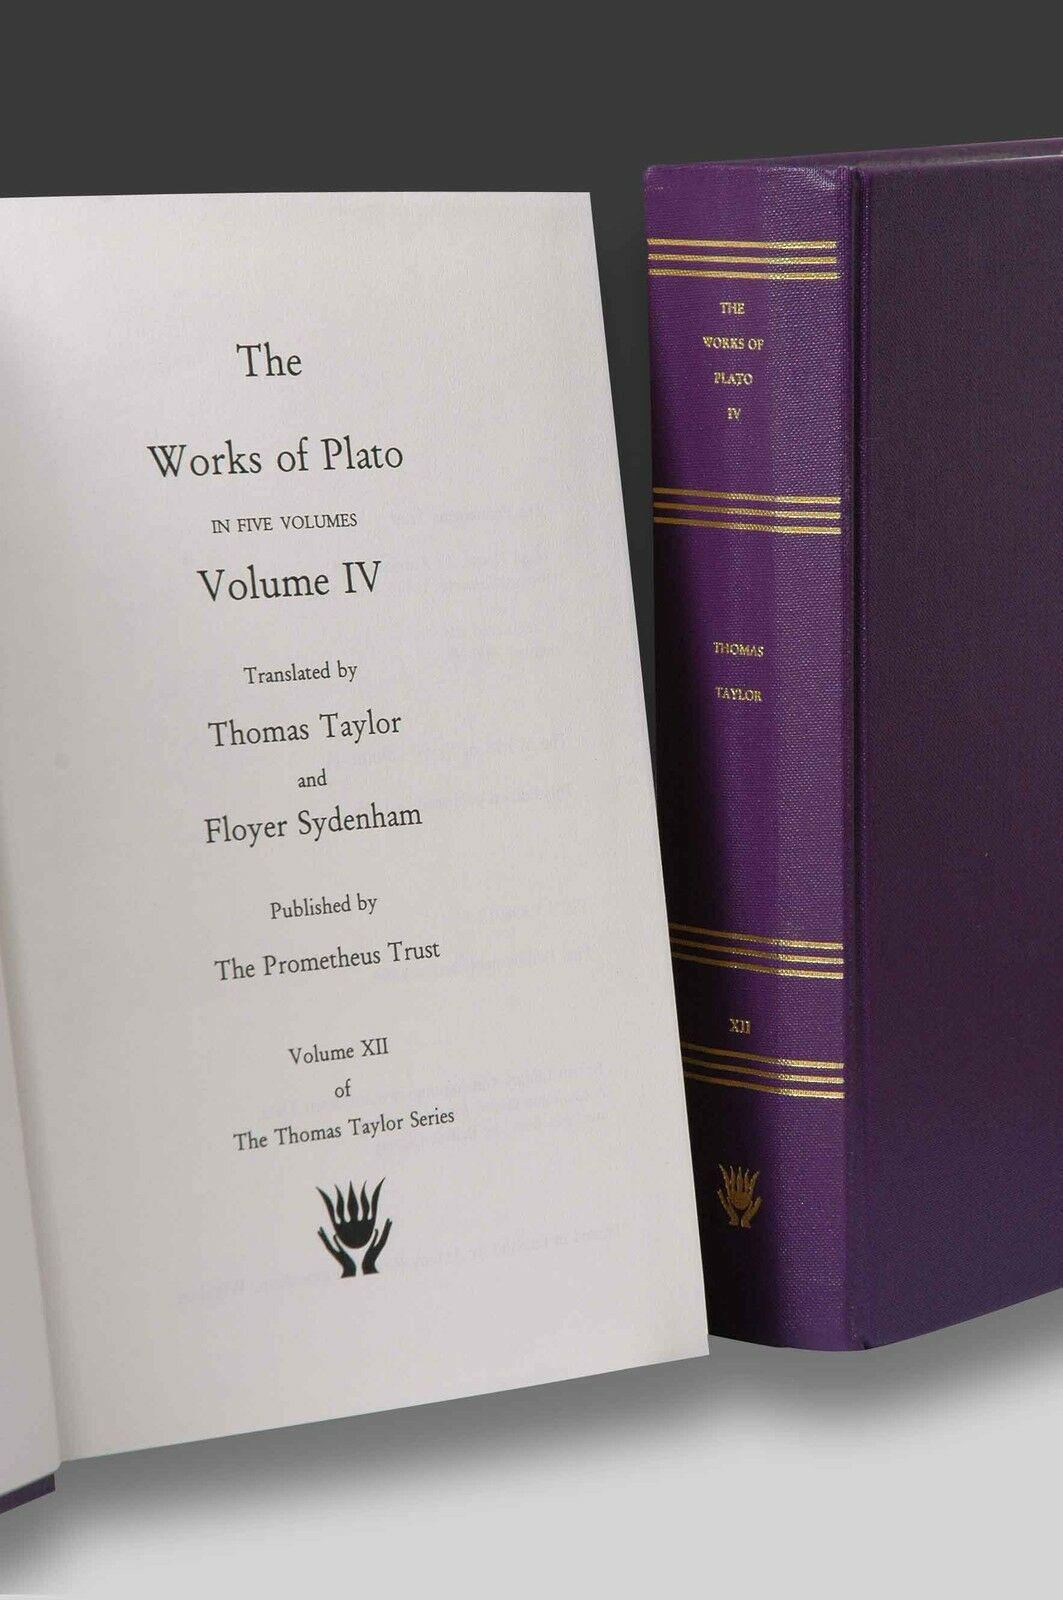 The Works of Plato, volume IV (Thomas Taylor Series, volume XII)